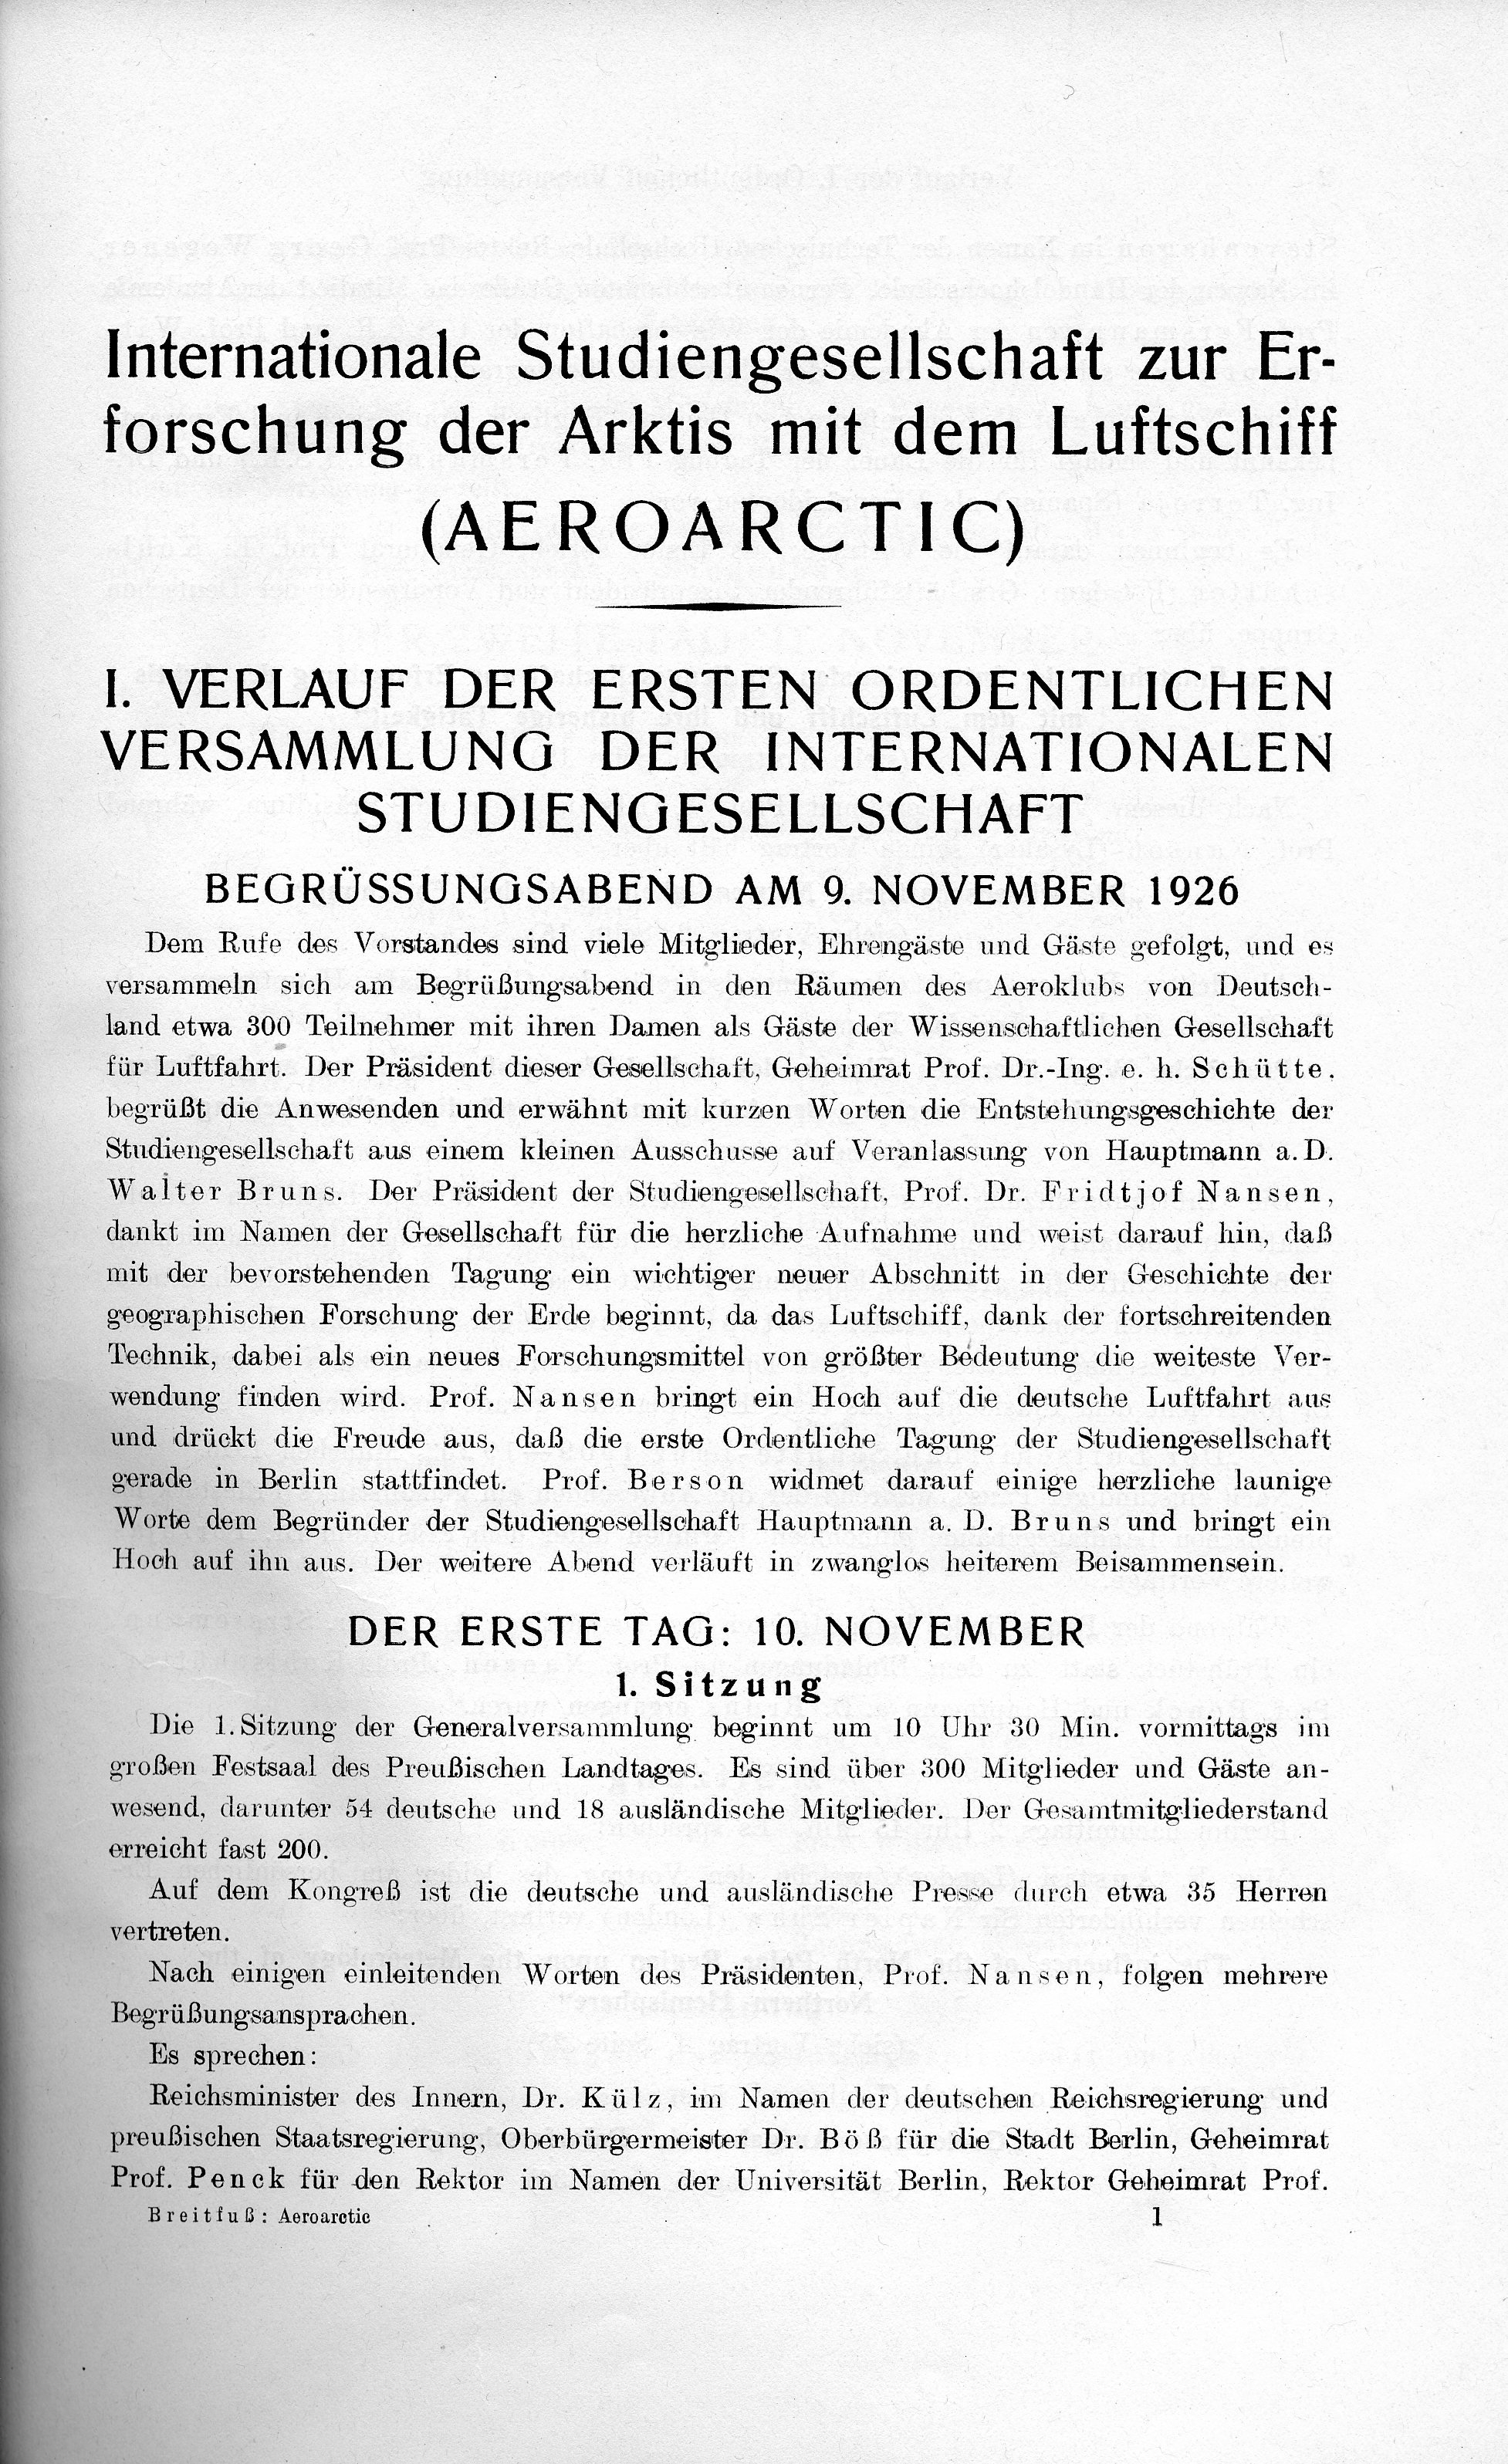 Protokoll der ersten AEROARCTIC-Versammlung vom 9. bis 13. November 1926 in Berlin (7 Seiten) (Zeppelin Museum CC BY-NC-SA)